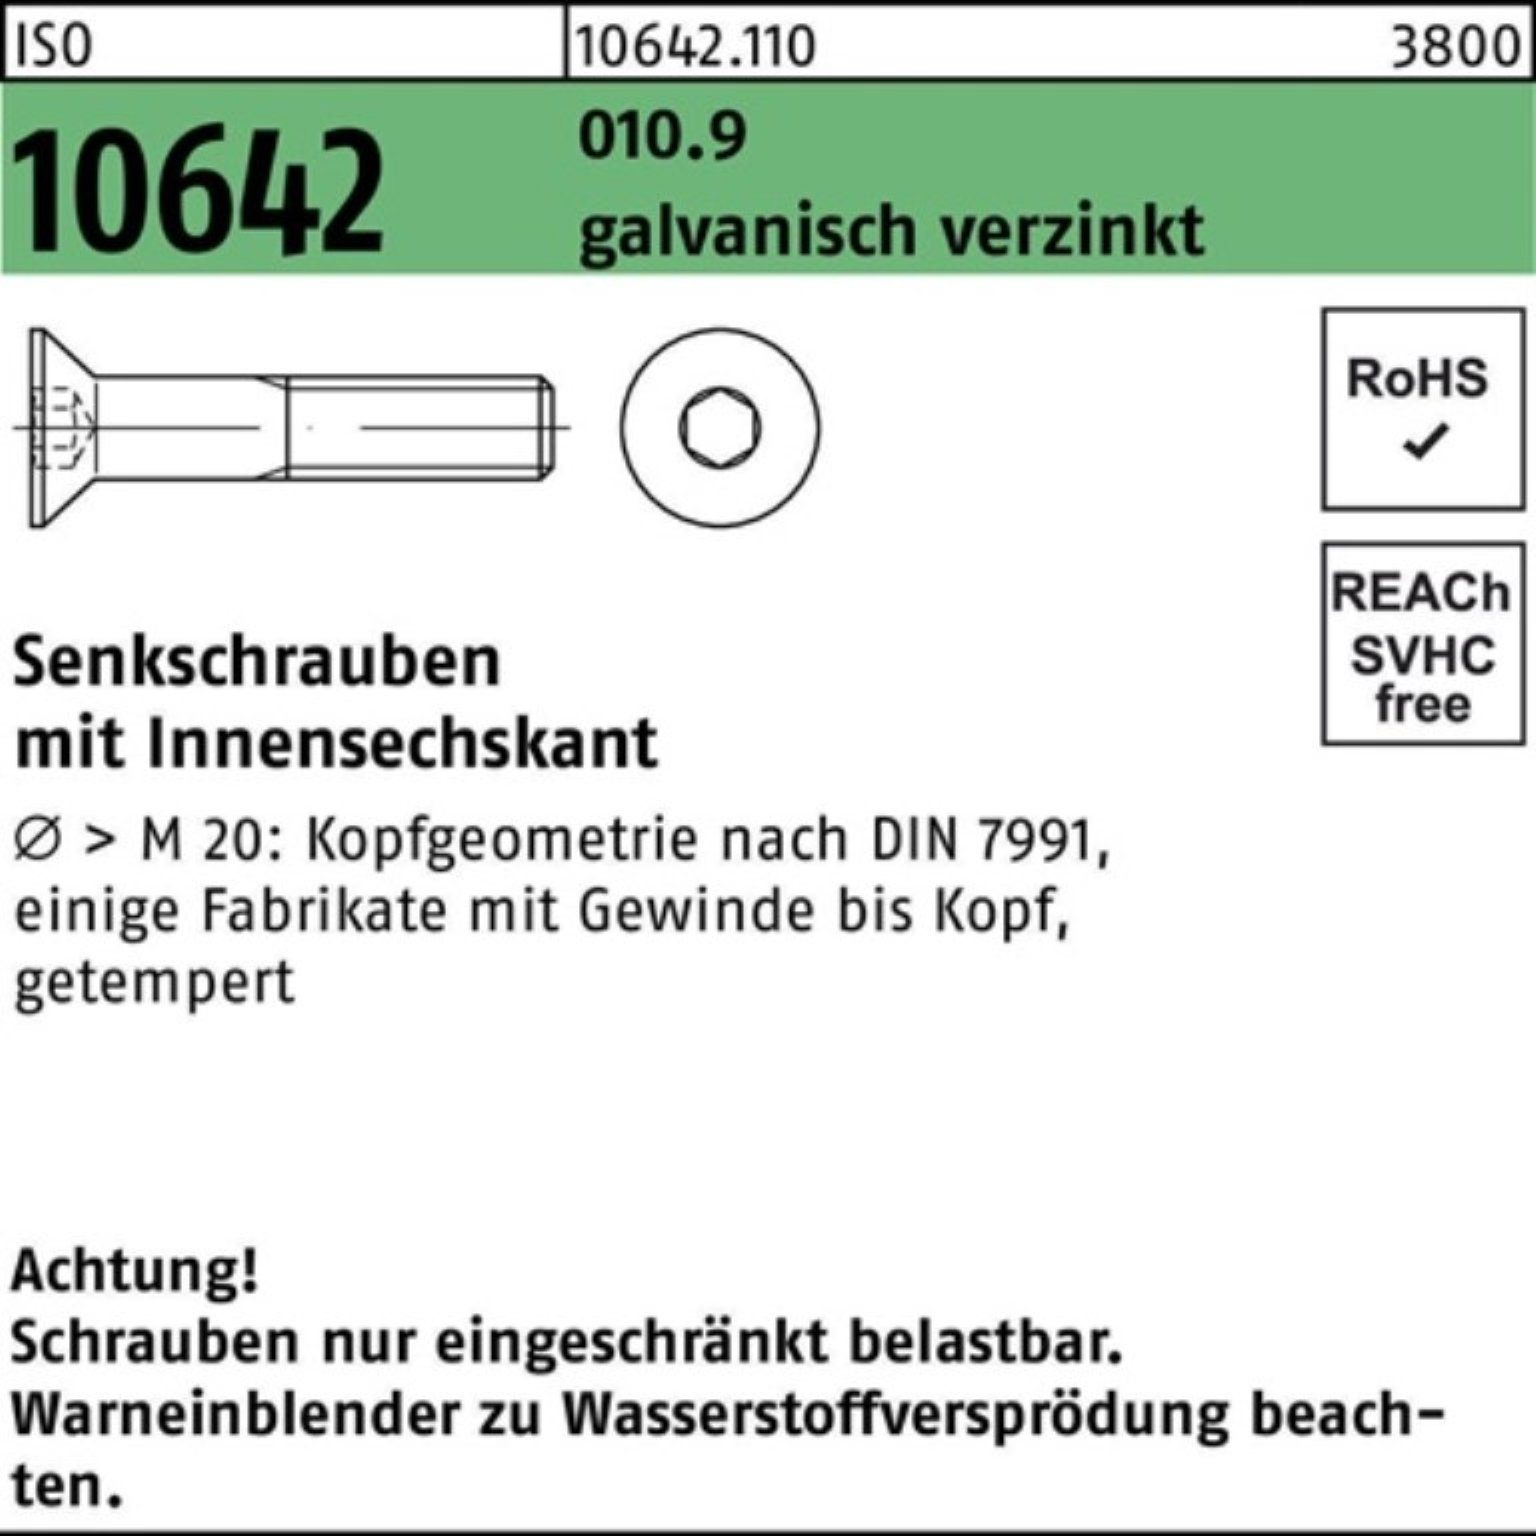 Reyher Senkschraube 200er Pack Senkschraube ISO 10642 Innen-6kt M10x 30 010.9 galv.verz. 2